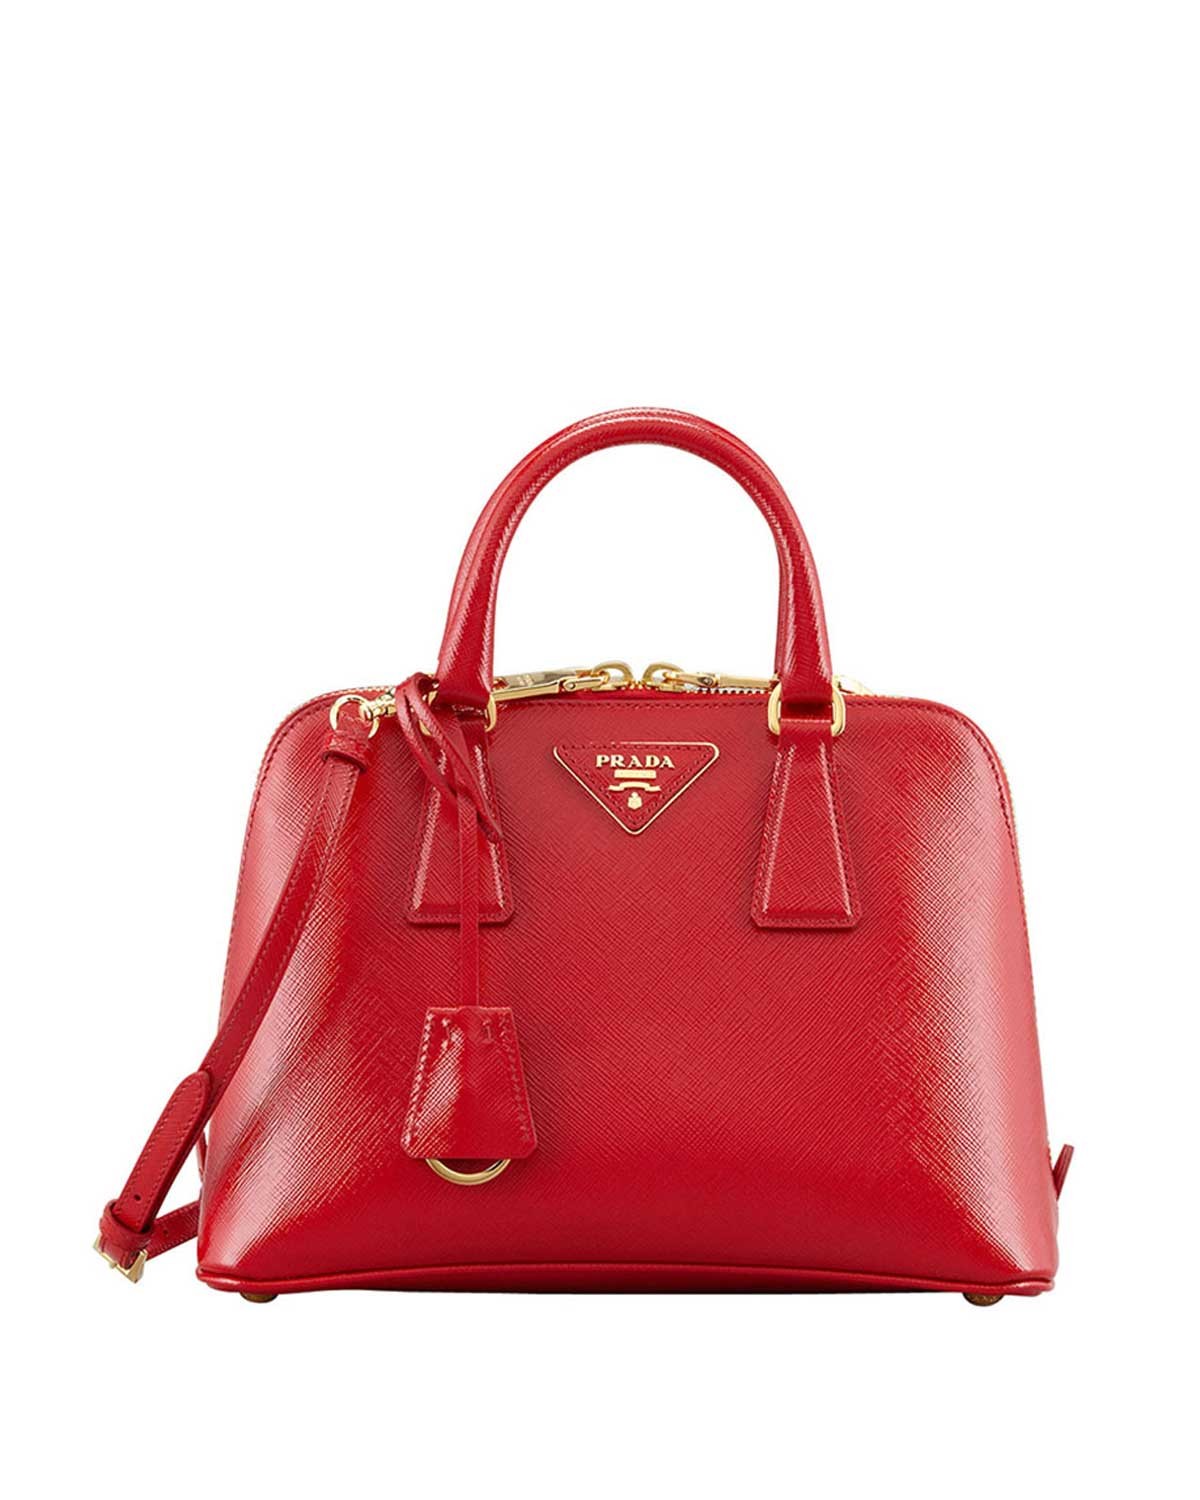 Prada Small Saffiano Leather Handbag replica - Affordable Luxury Bags